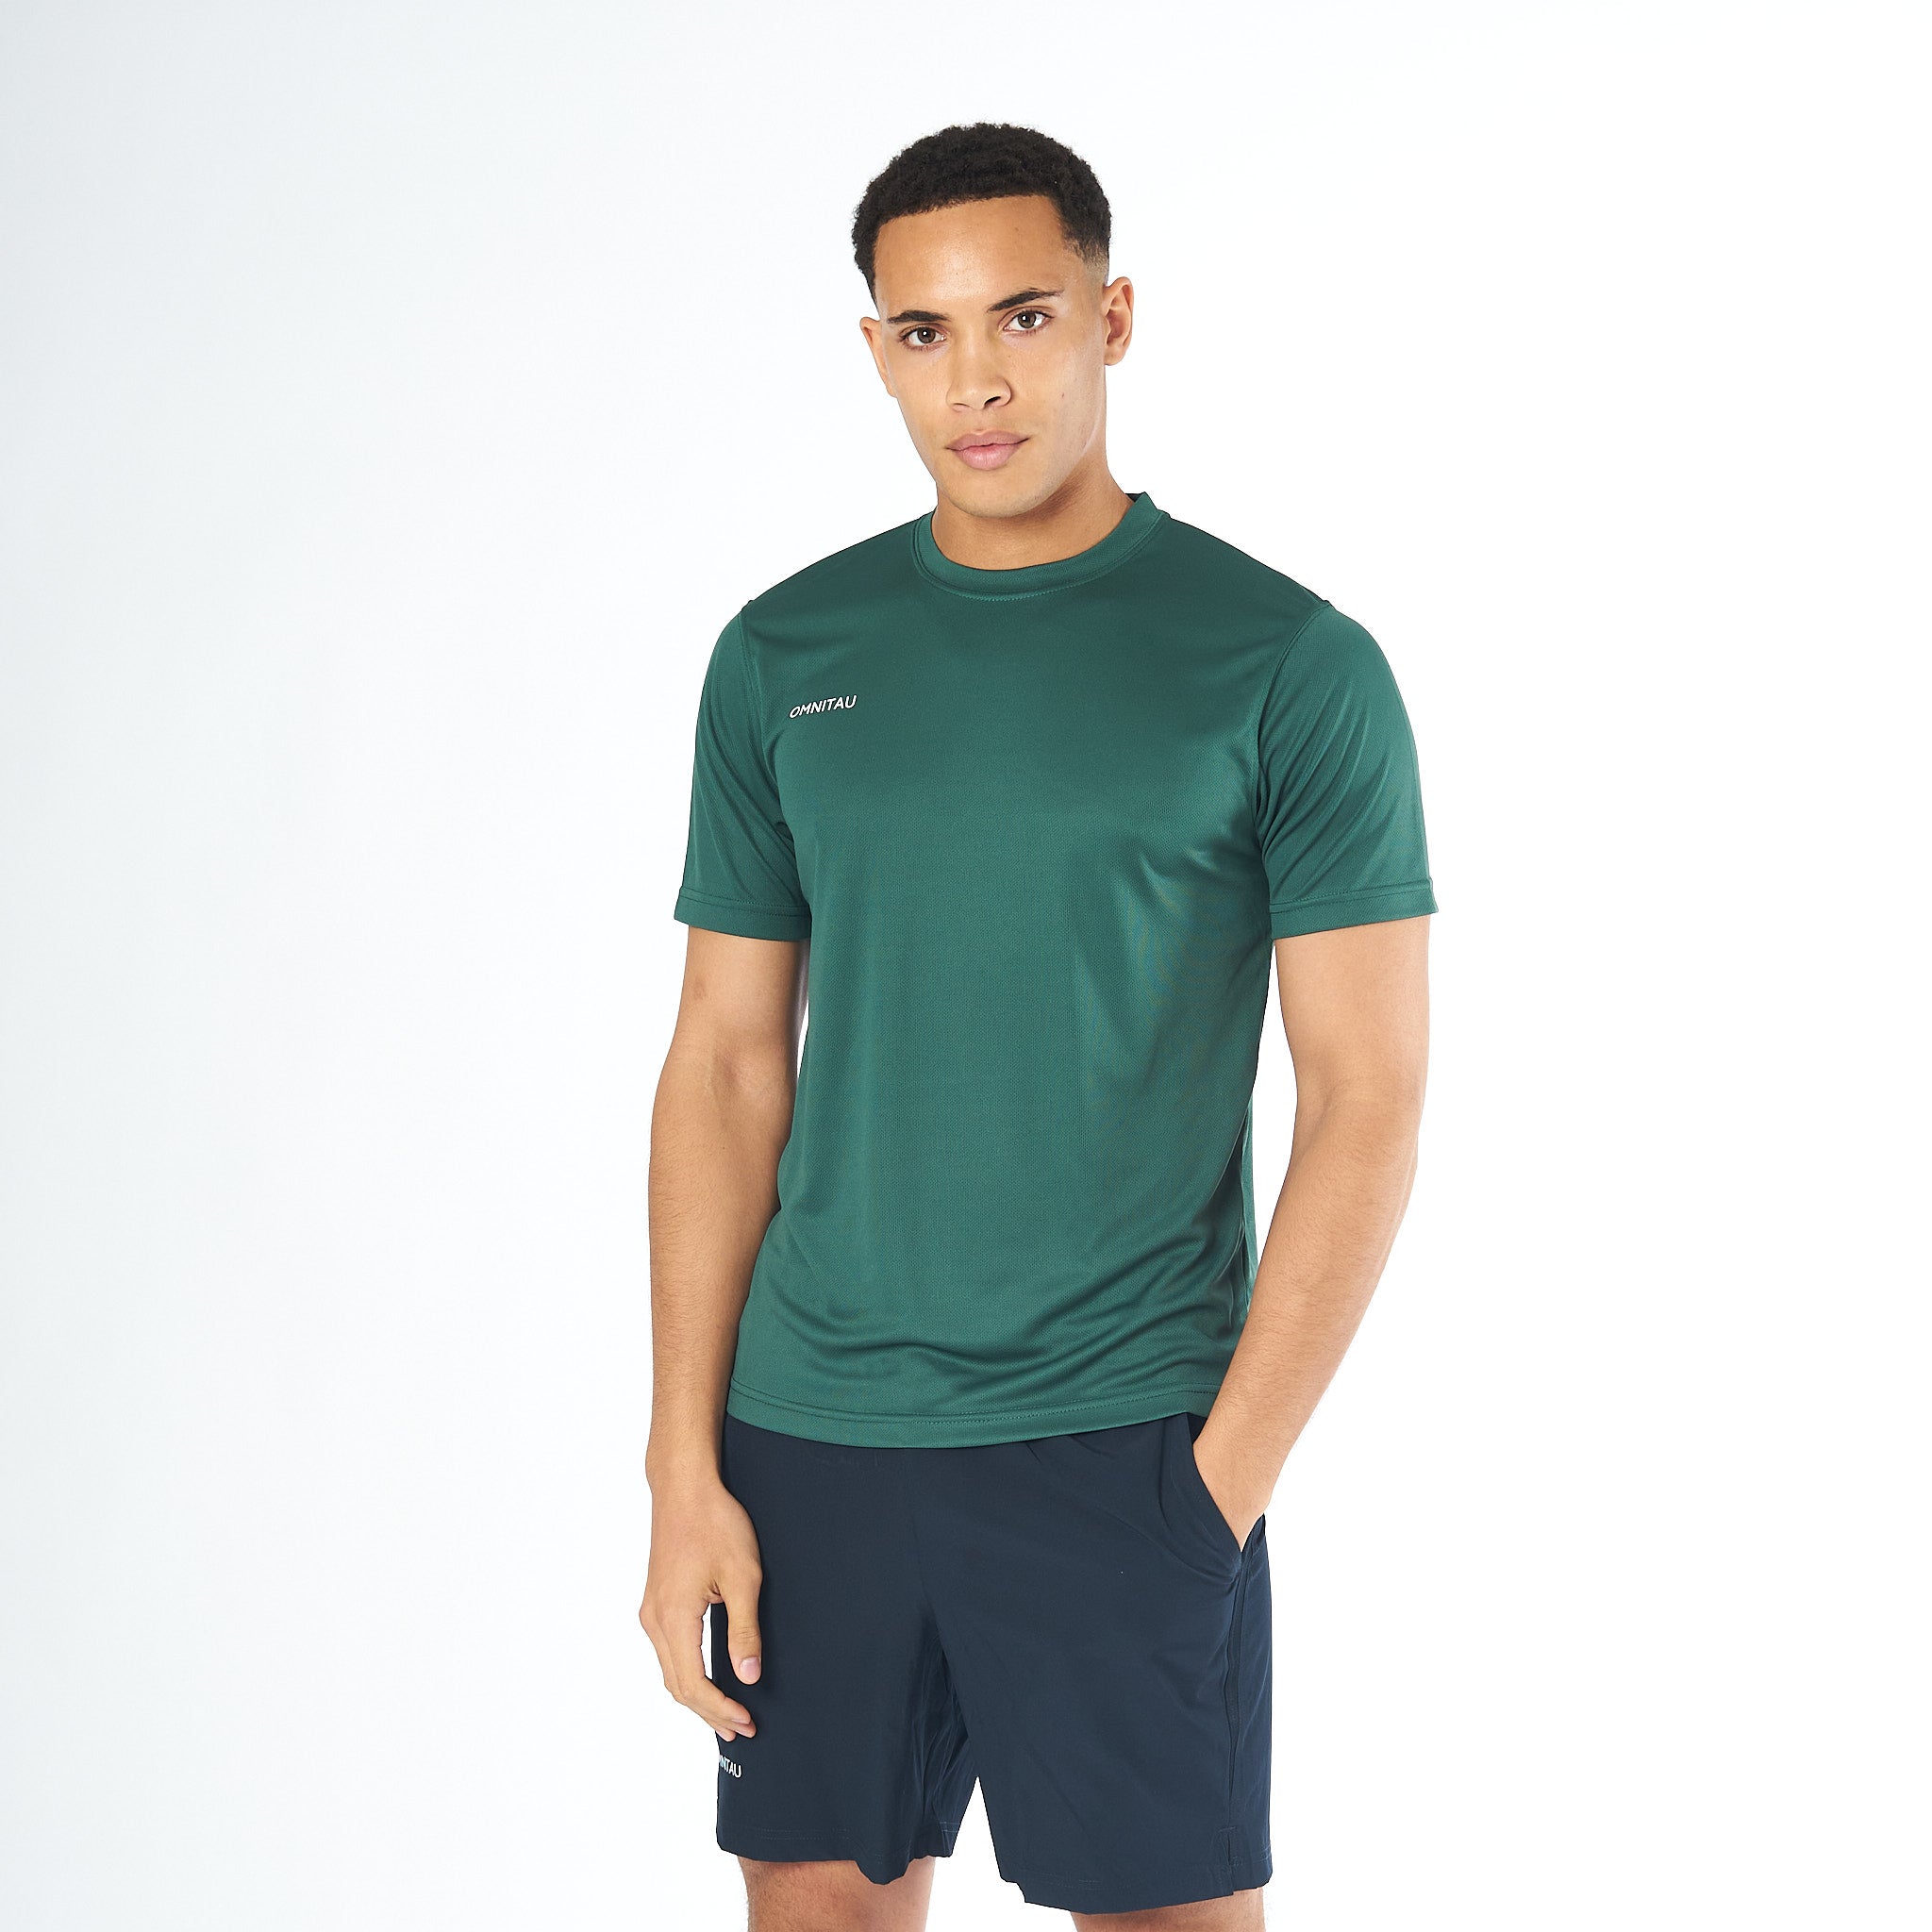 Omnitau Men's Team Sports Core Football Shirt - Bottle Green